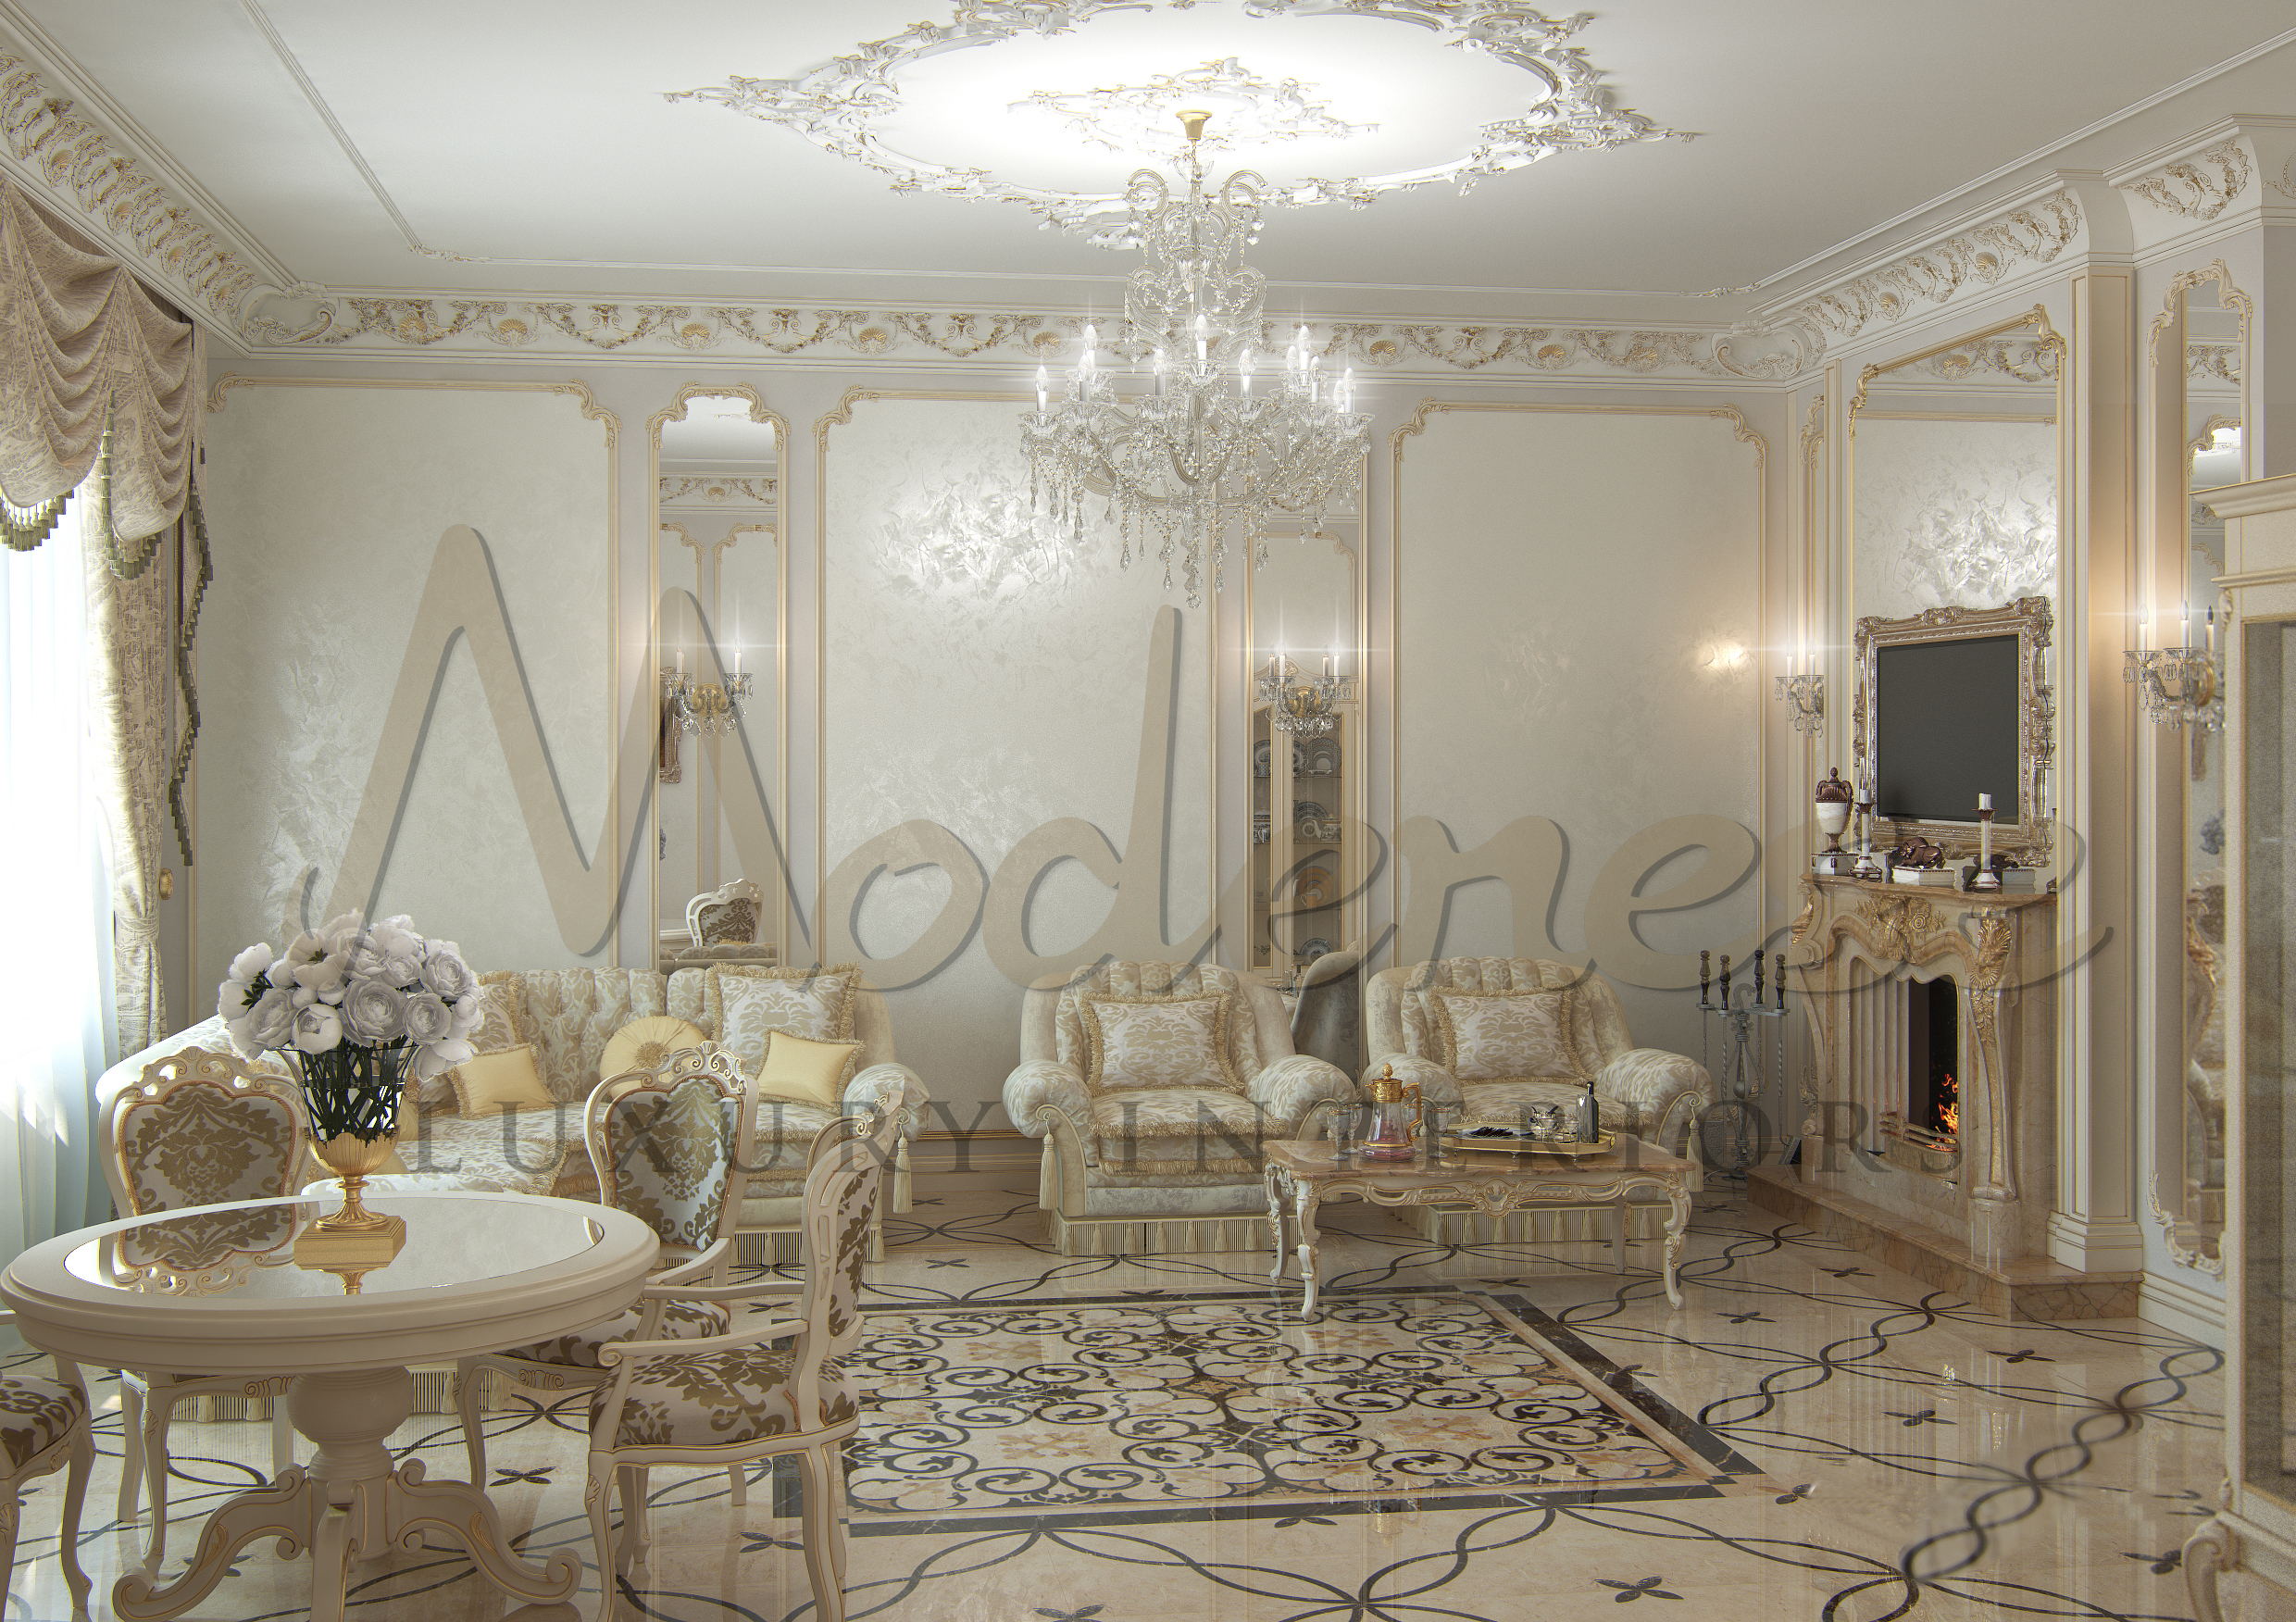 Italian handmade interiors. Bespoke interior design project and artisanal furniture production.Luxury Living Room Furniture